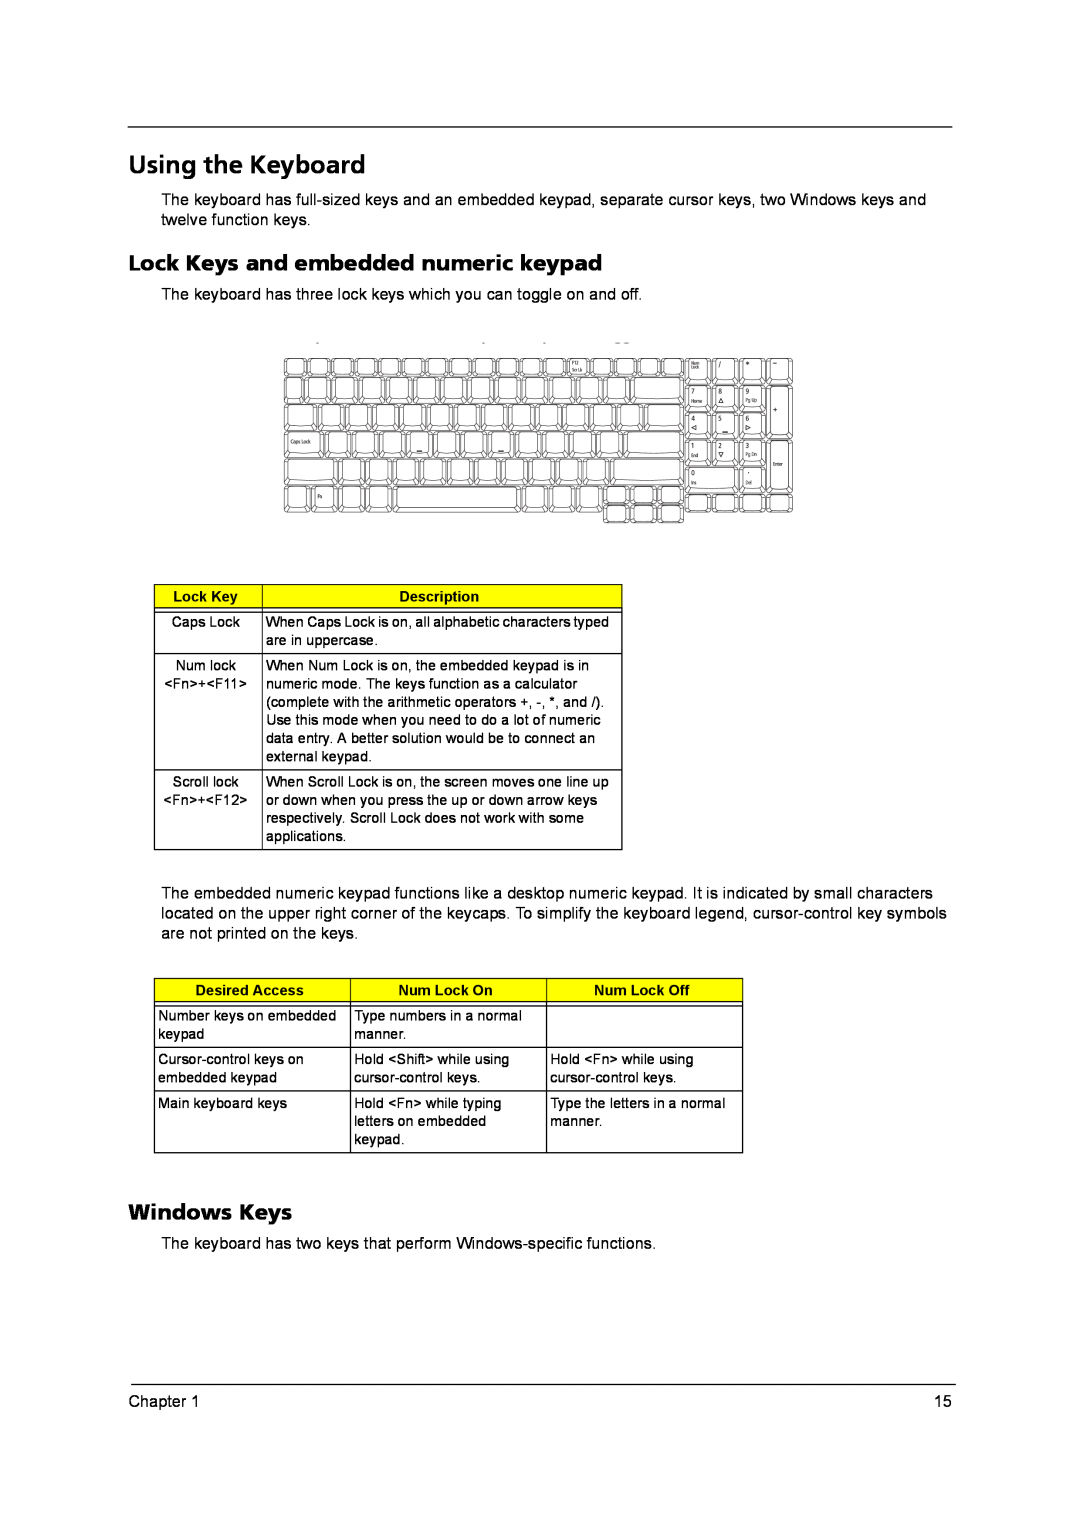 Acer 9800 manual Using the Keyboard, Lock Keys and embedded numeric keypad, Windows Keys 